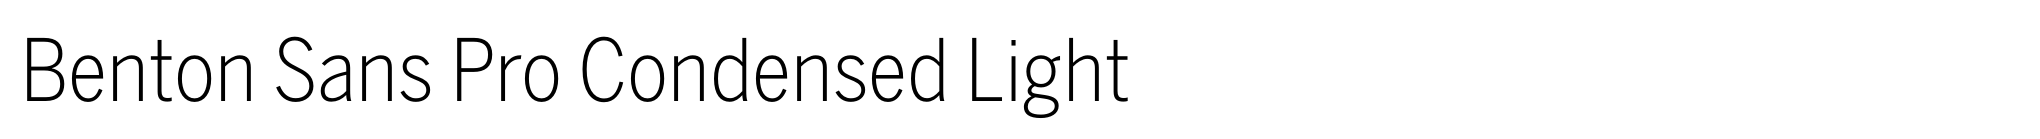 Benton Sans Pro Condensed Light image